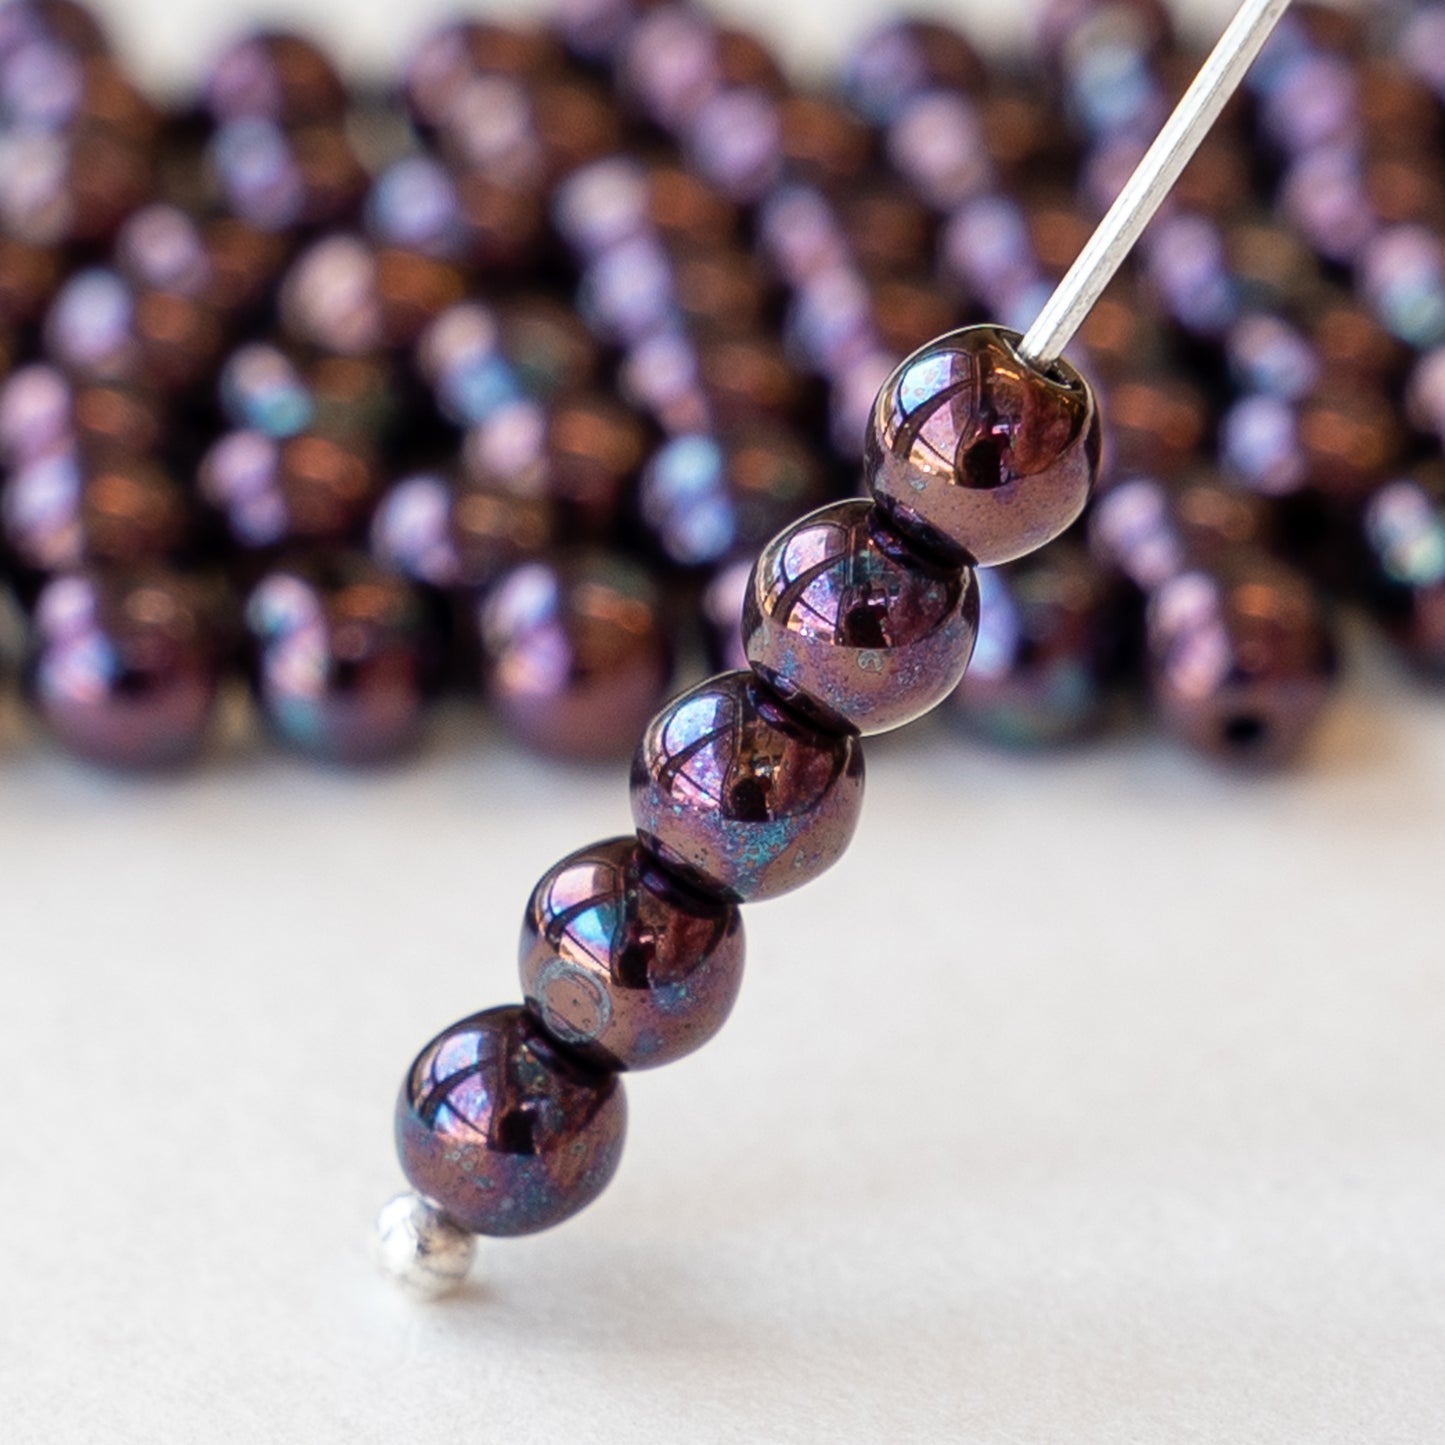 4mm Round Glass Beads - Deep Eggplant Purple - 100 Beads